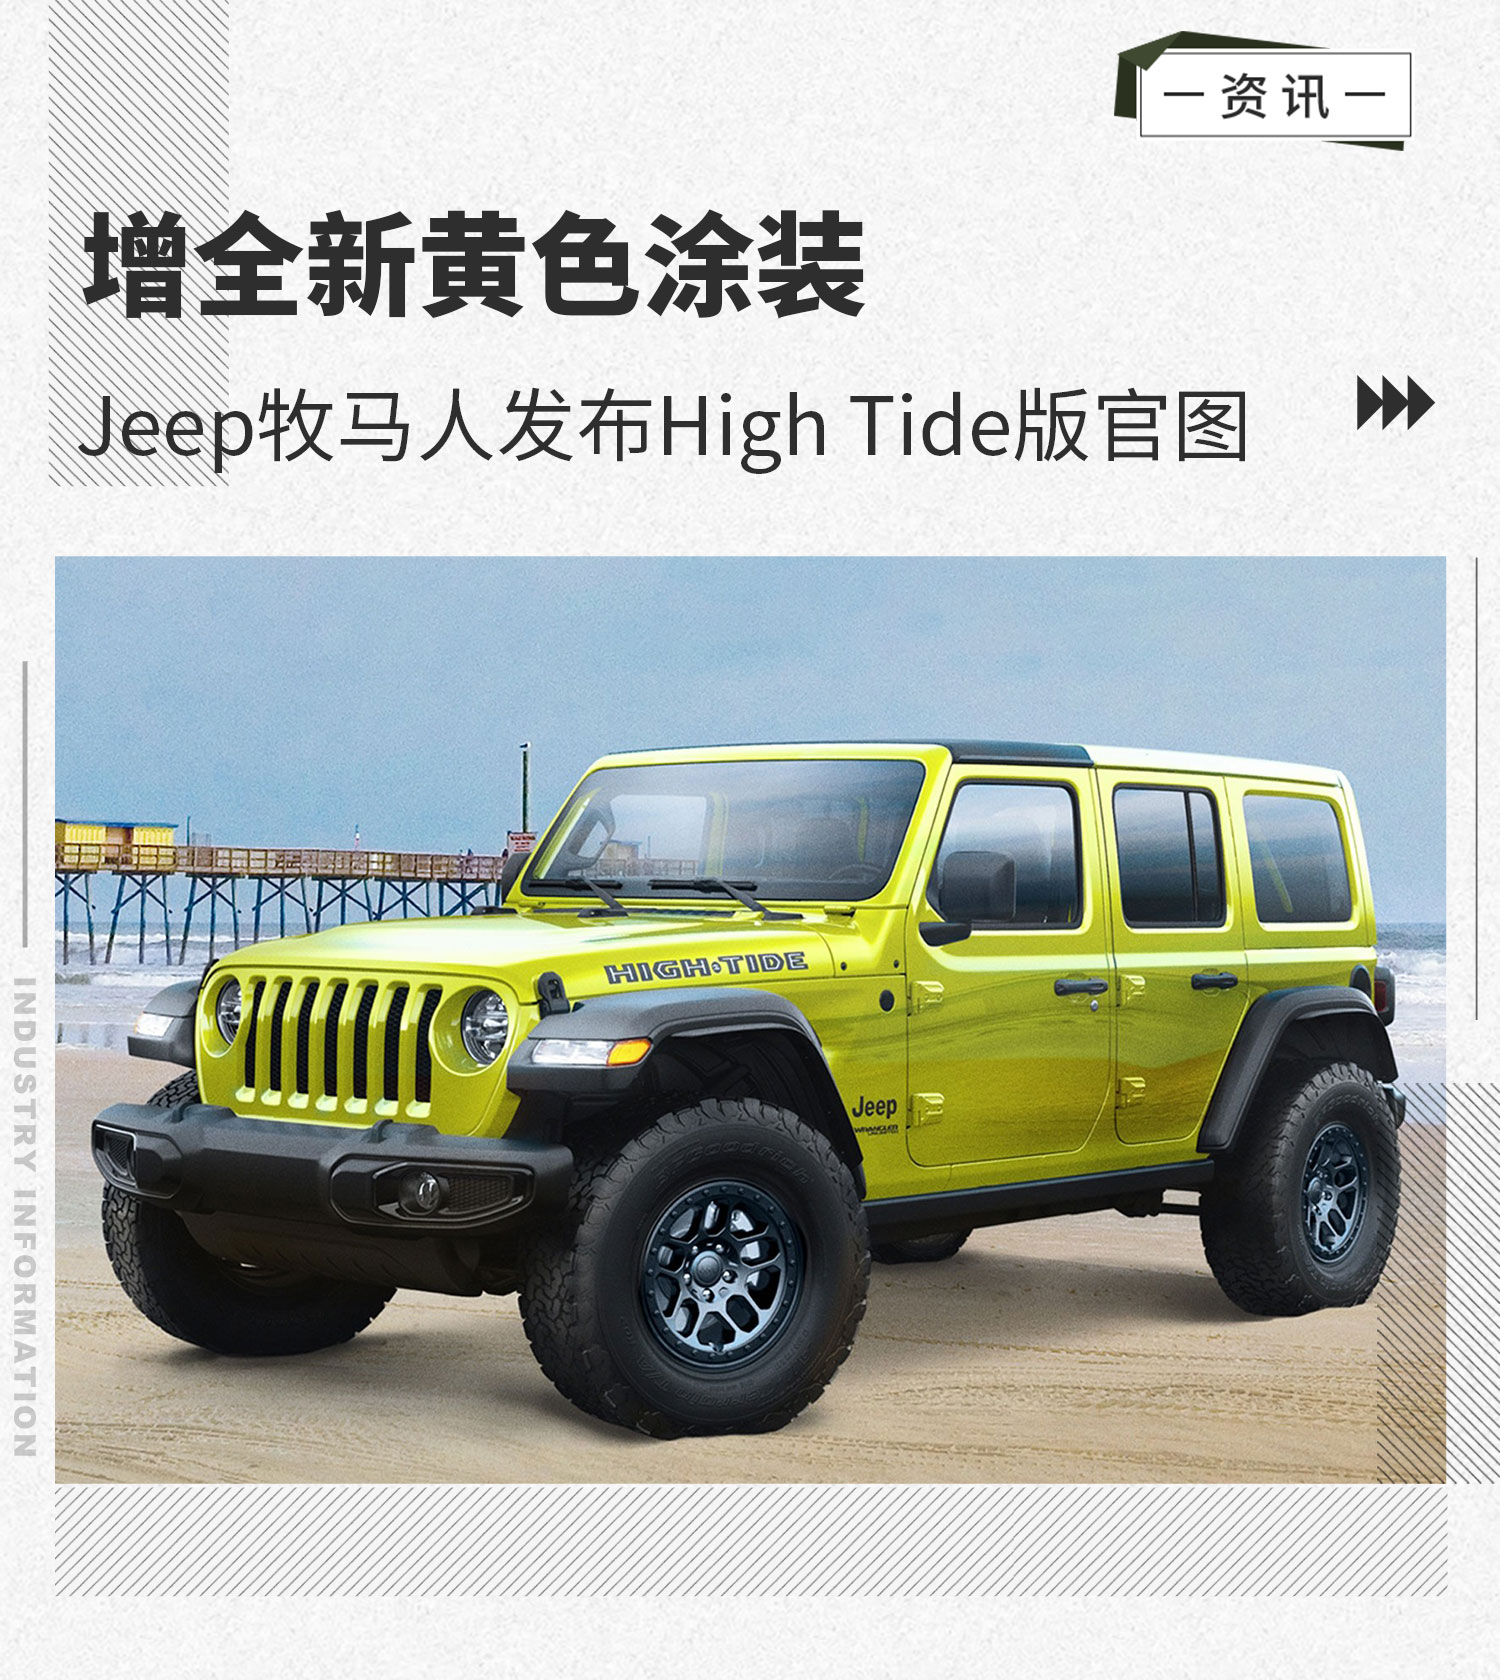 Jeep牧马人High Tide版官图发布 增全新黄色涂装